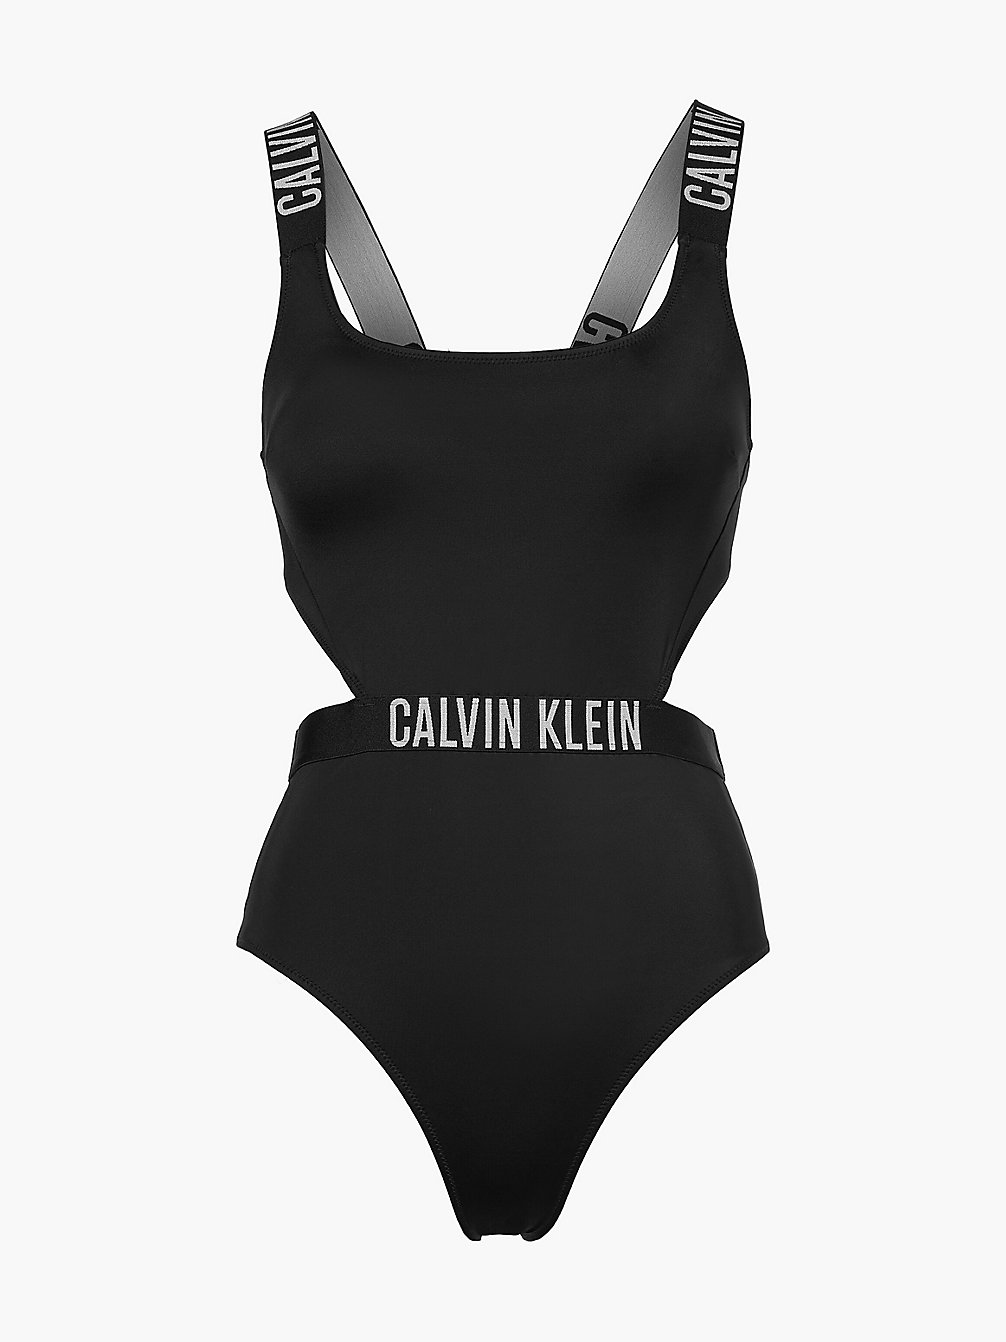 PVH BLACK > Cut-Out Badpak - Intense Power > undefined dames - Calvin Klein